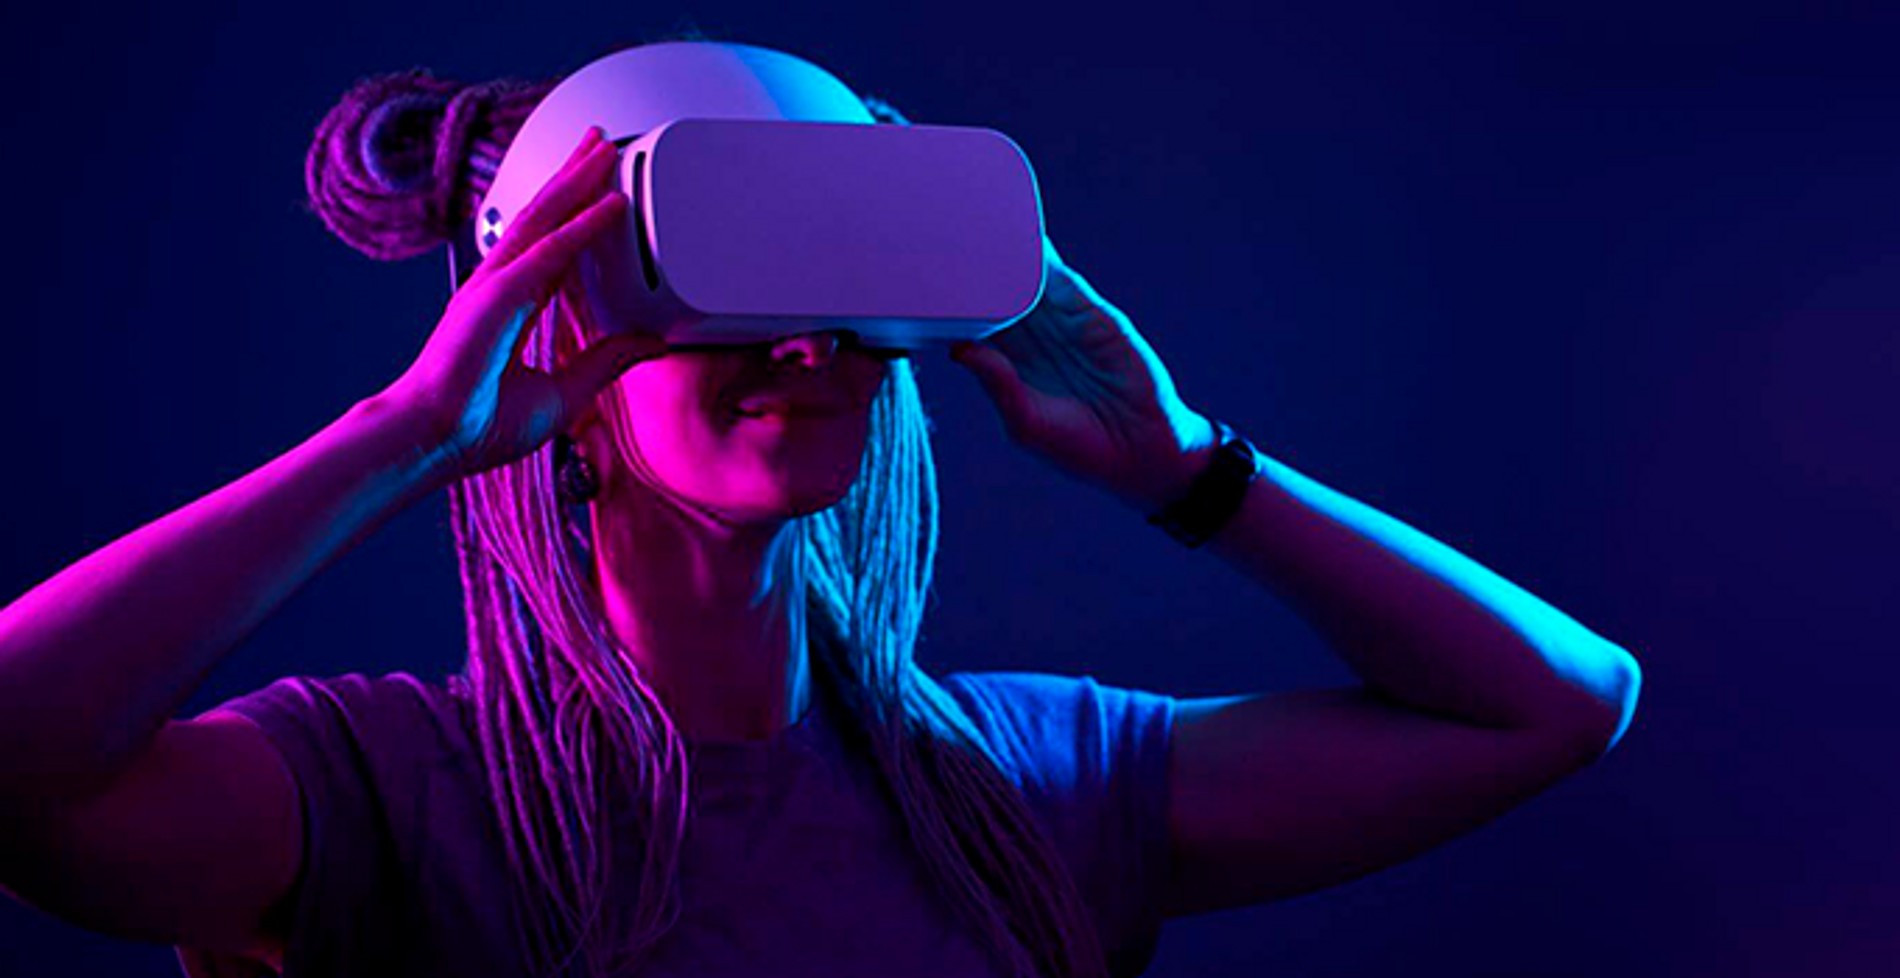 Blonde vr. Визуальная реальность. Вируальная реальность. VR виртуальная реальность. Очки виртуальной реальности девушка.